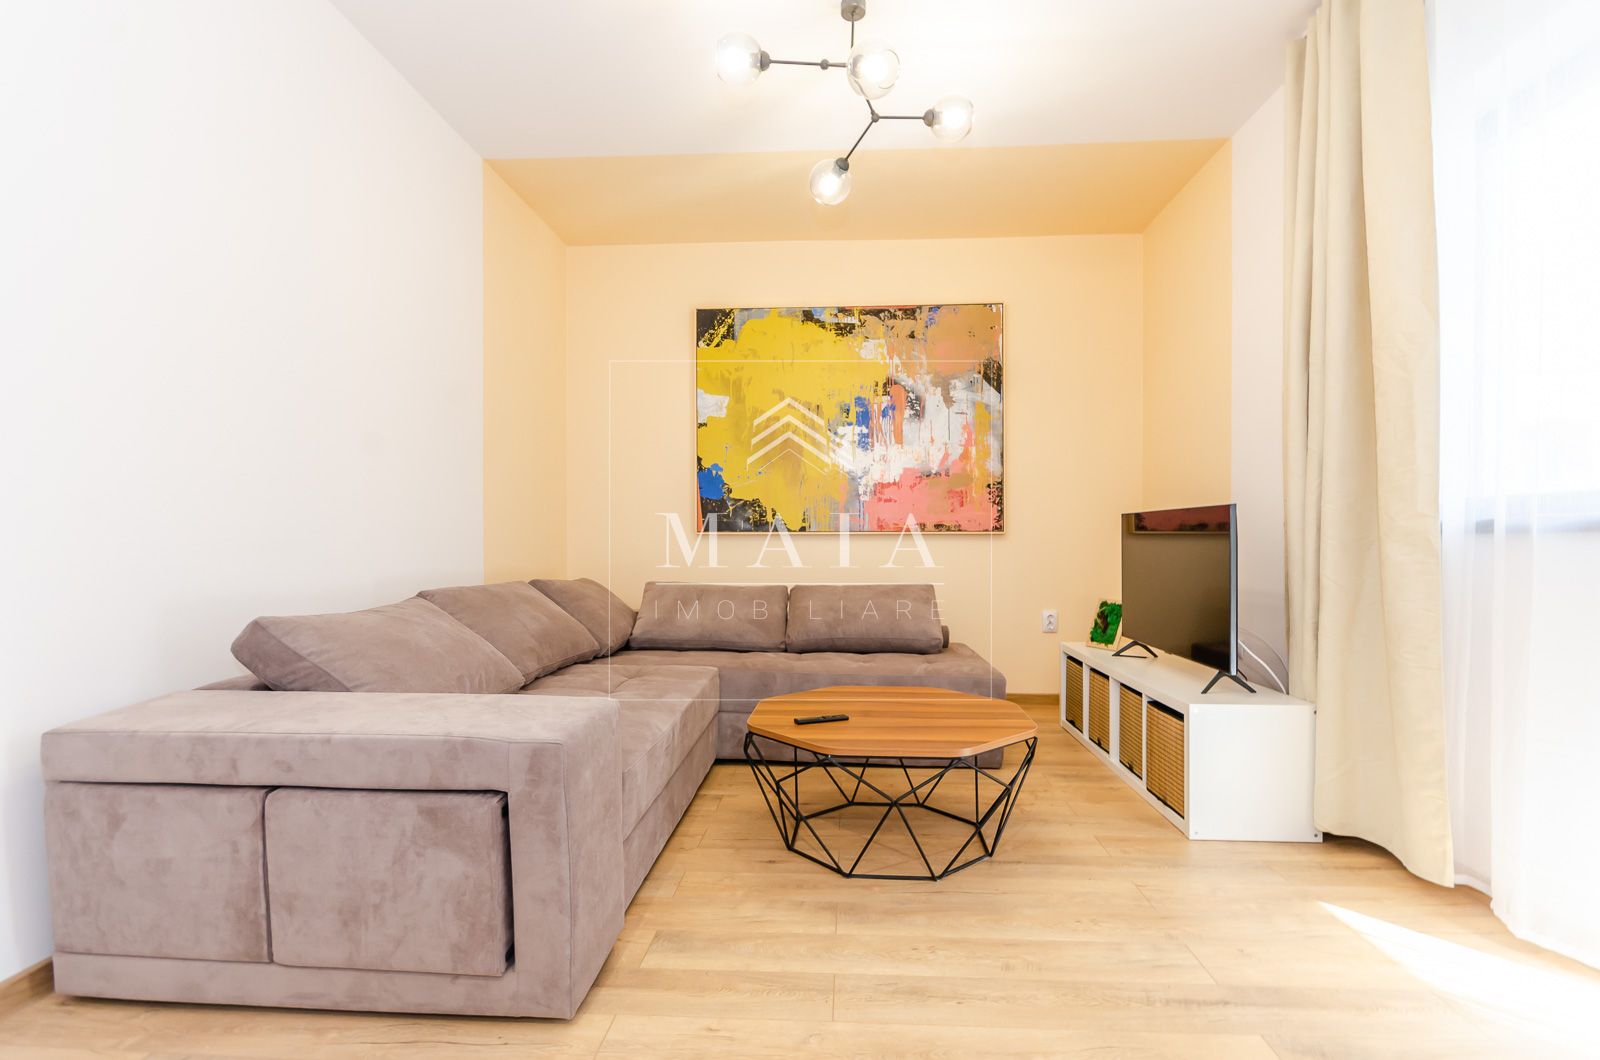 Apartament cu gradina si design interior deosebit, Selimbar-Nicolae Brana